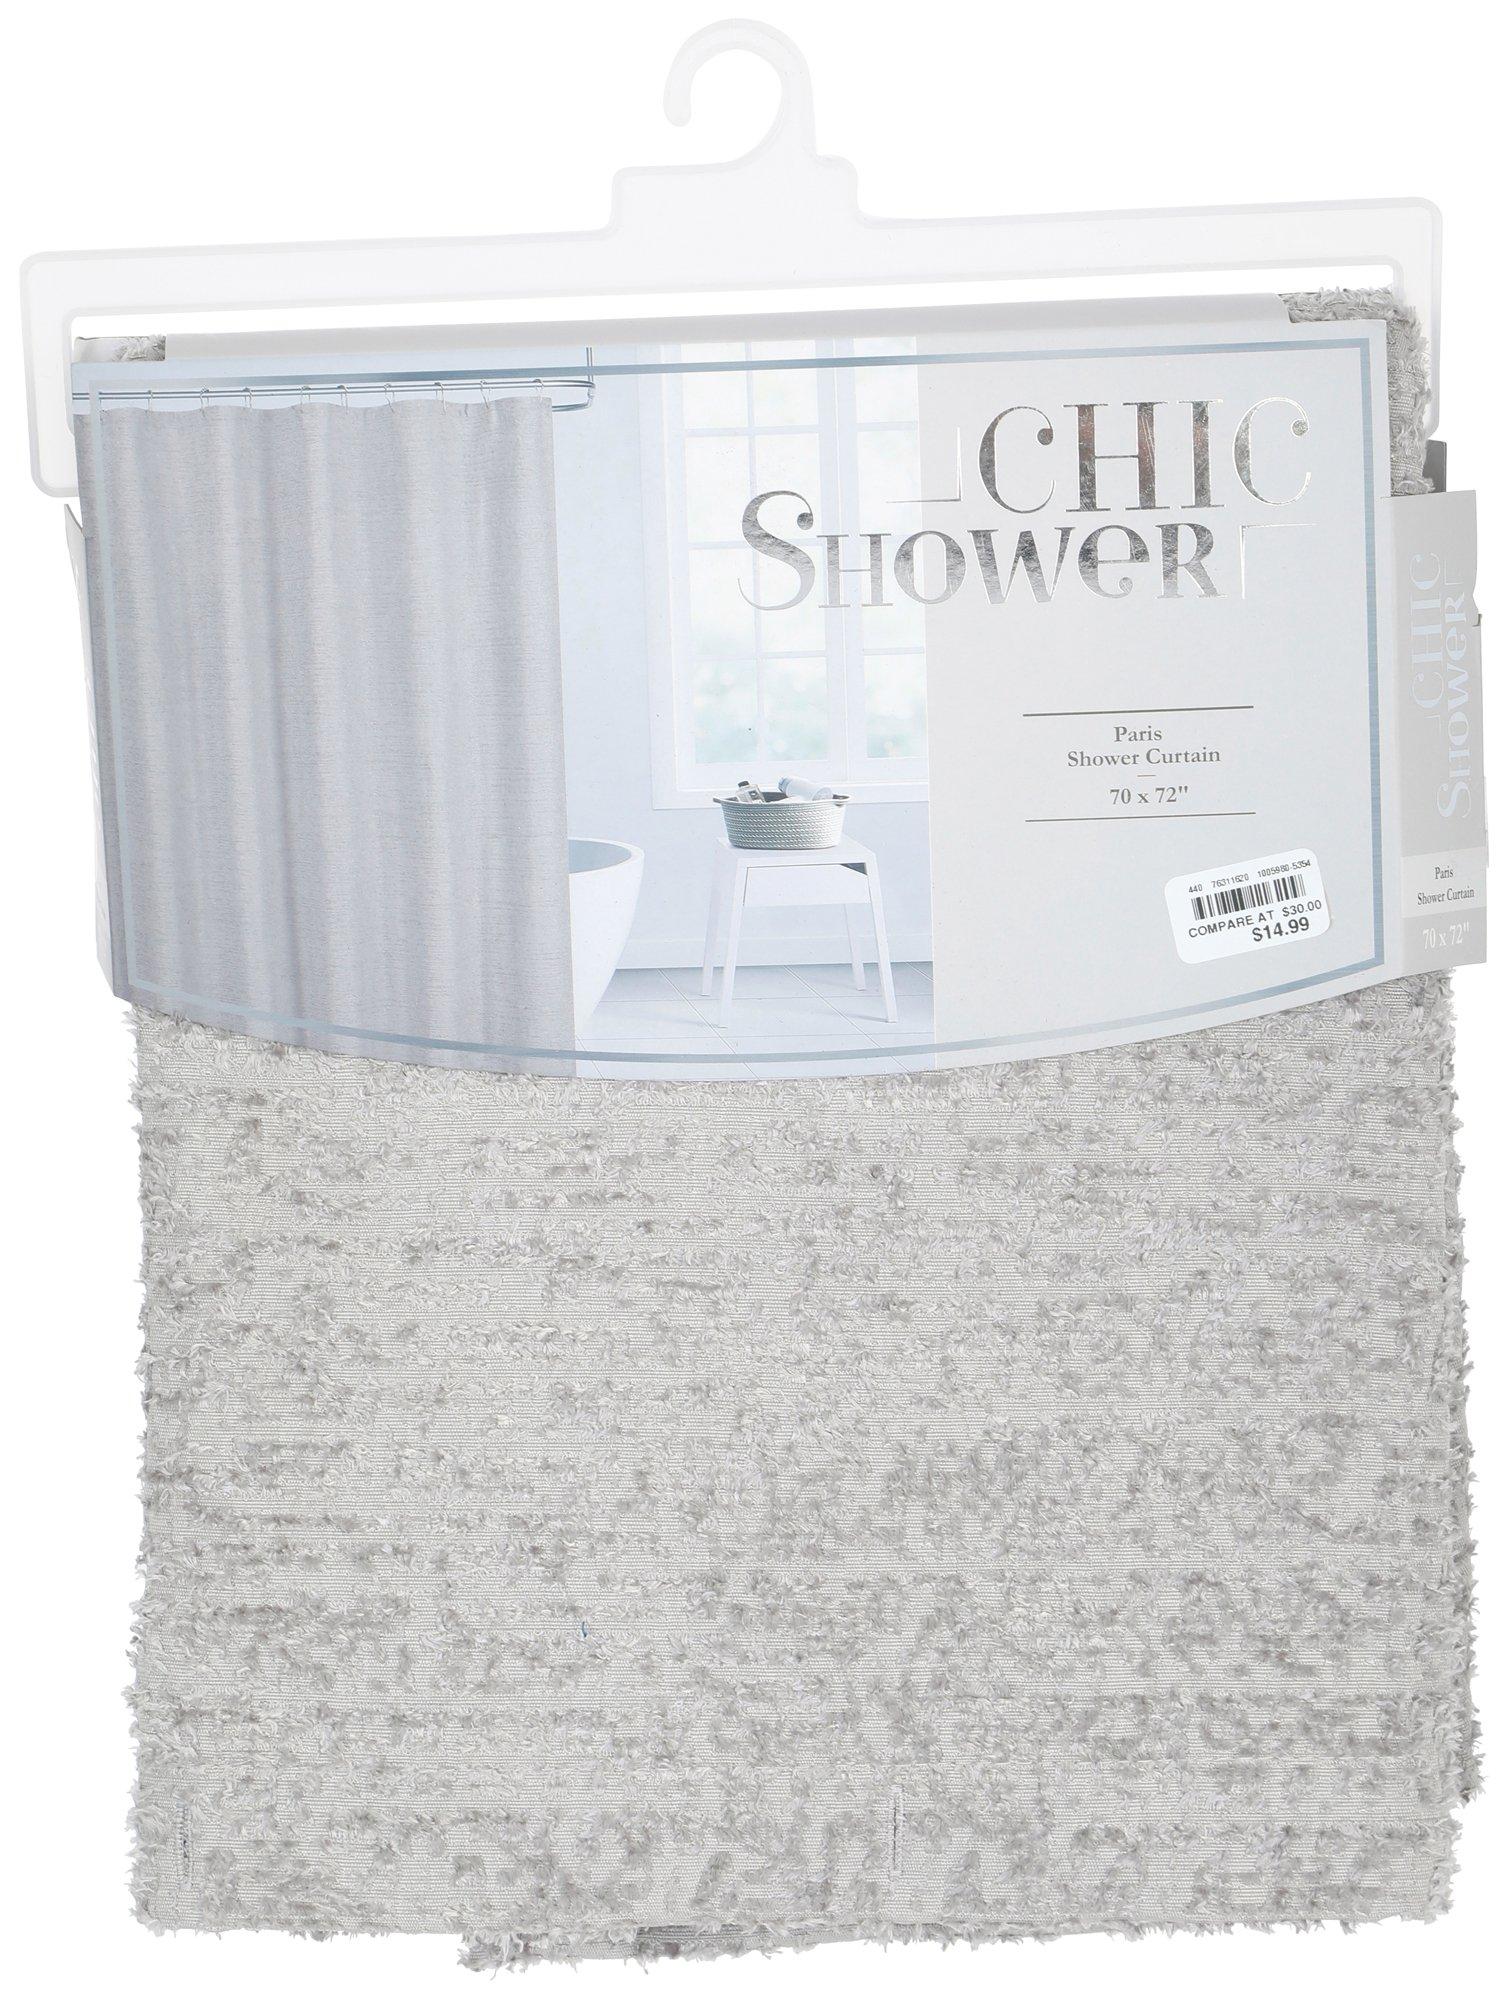 72 Paris Shower Curtain - Grey